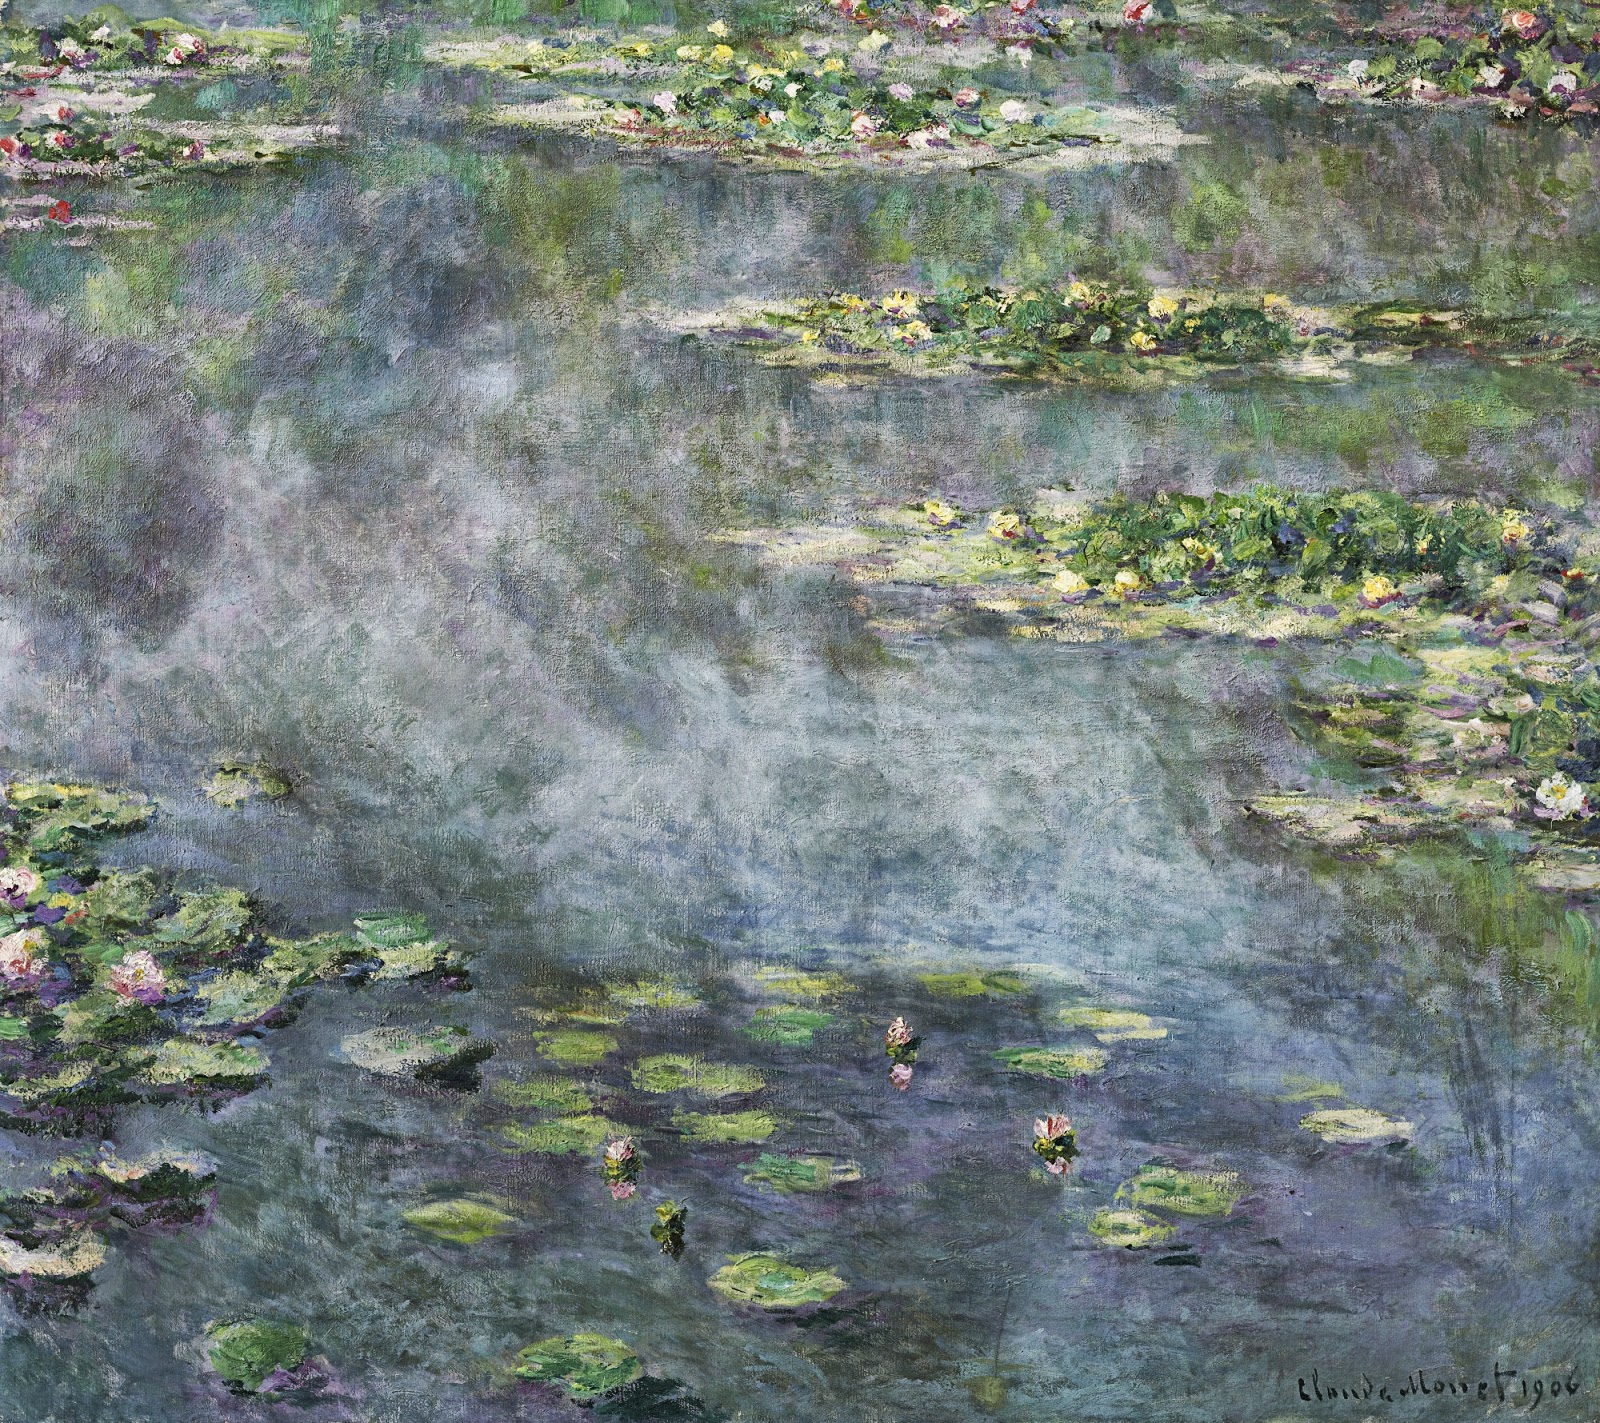 Claude+Monet-1840-1926 (513).jpg